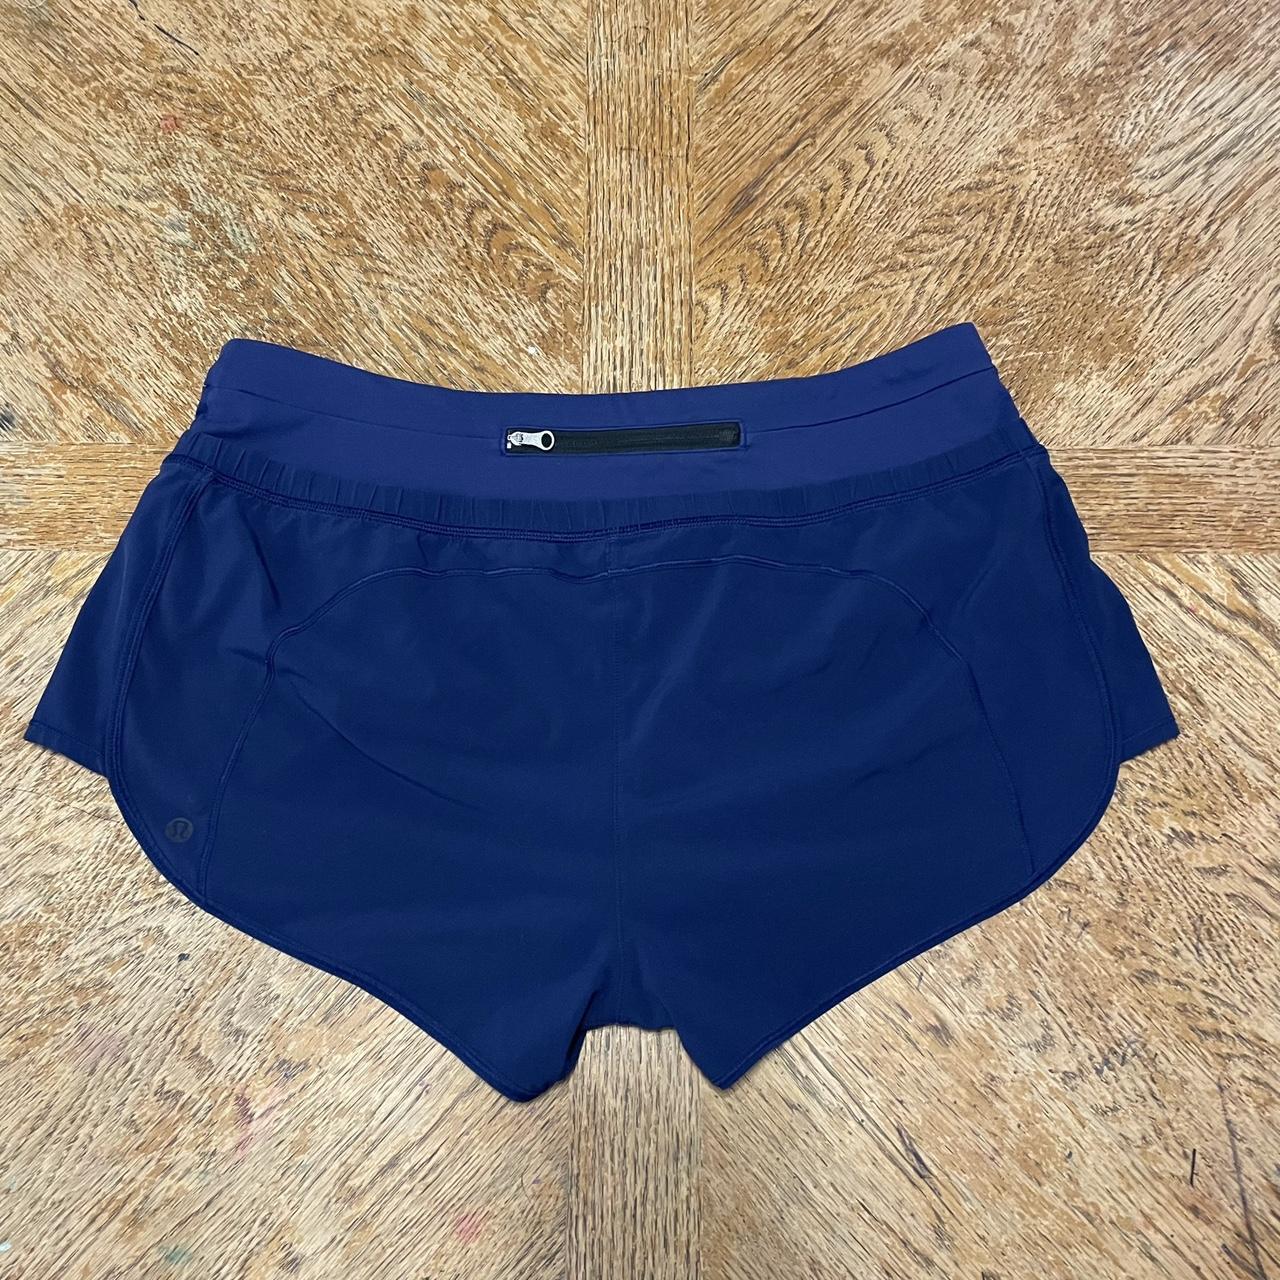 Lululemon Athletica navy blue shorts 2.5 inch - Depop